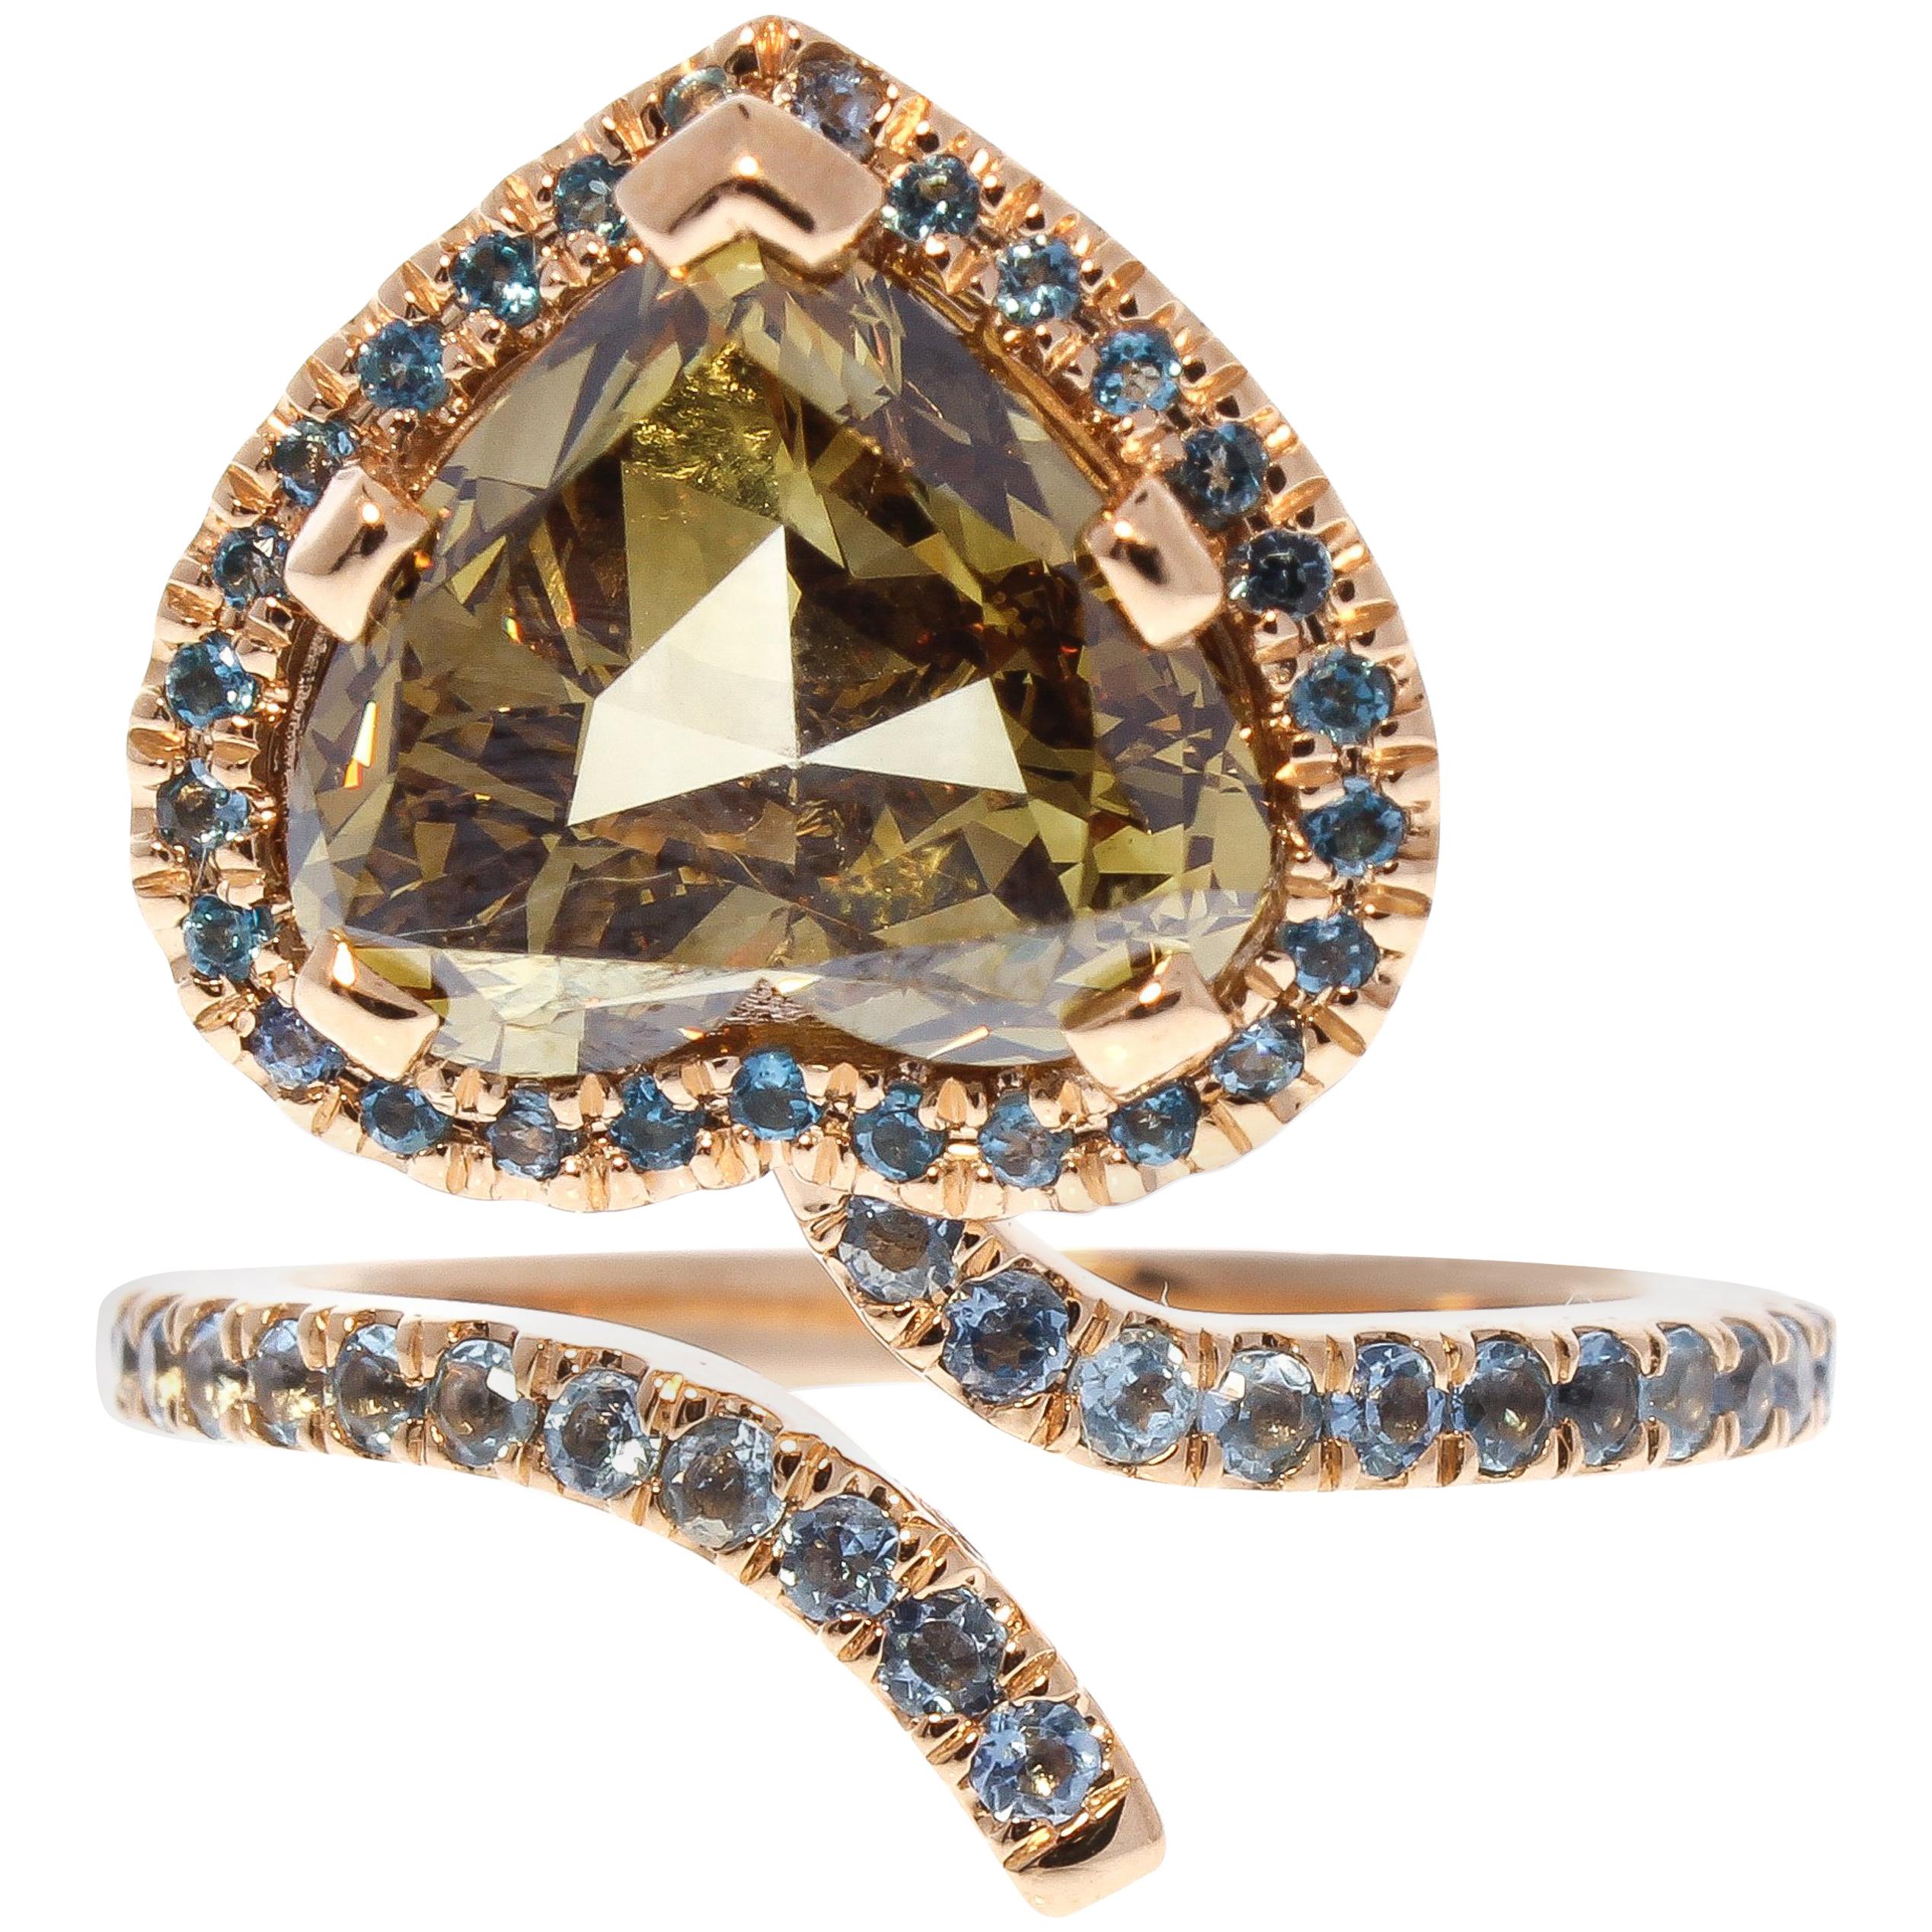 GIA Certified 5.02 Carat Fancy Dark Brownish Yellow Heart Shaped Diamond Ring